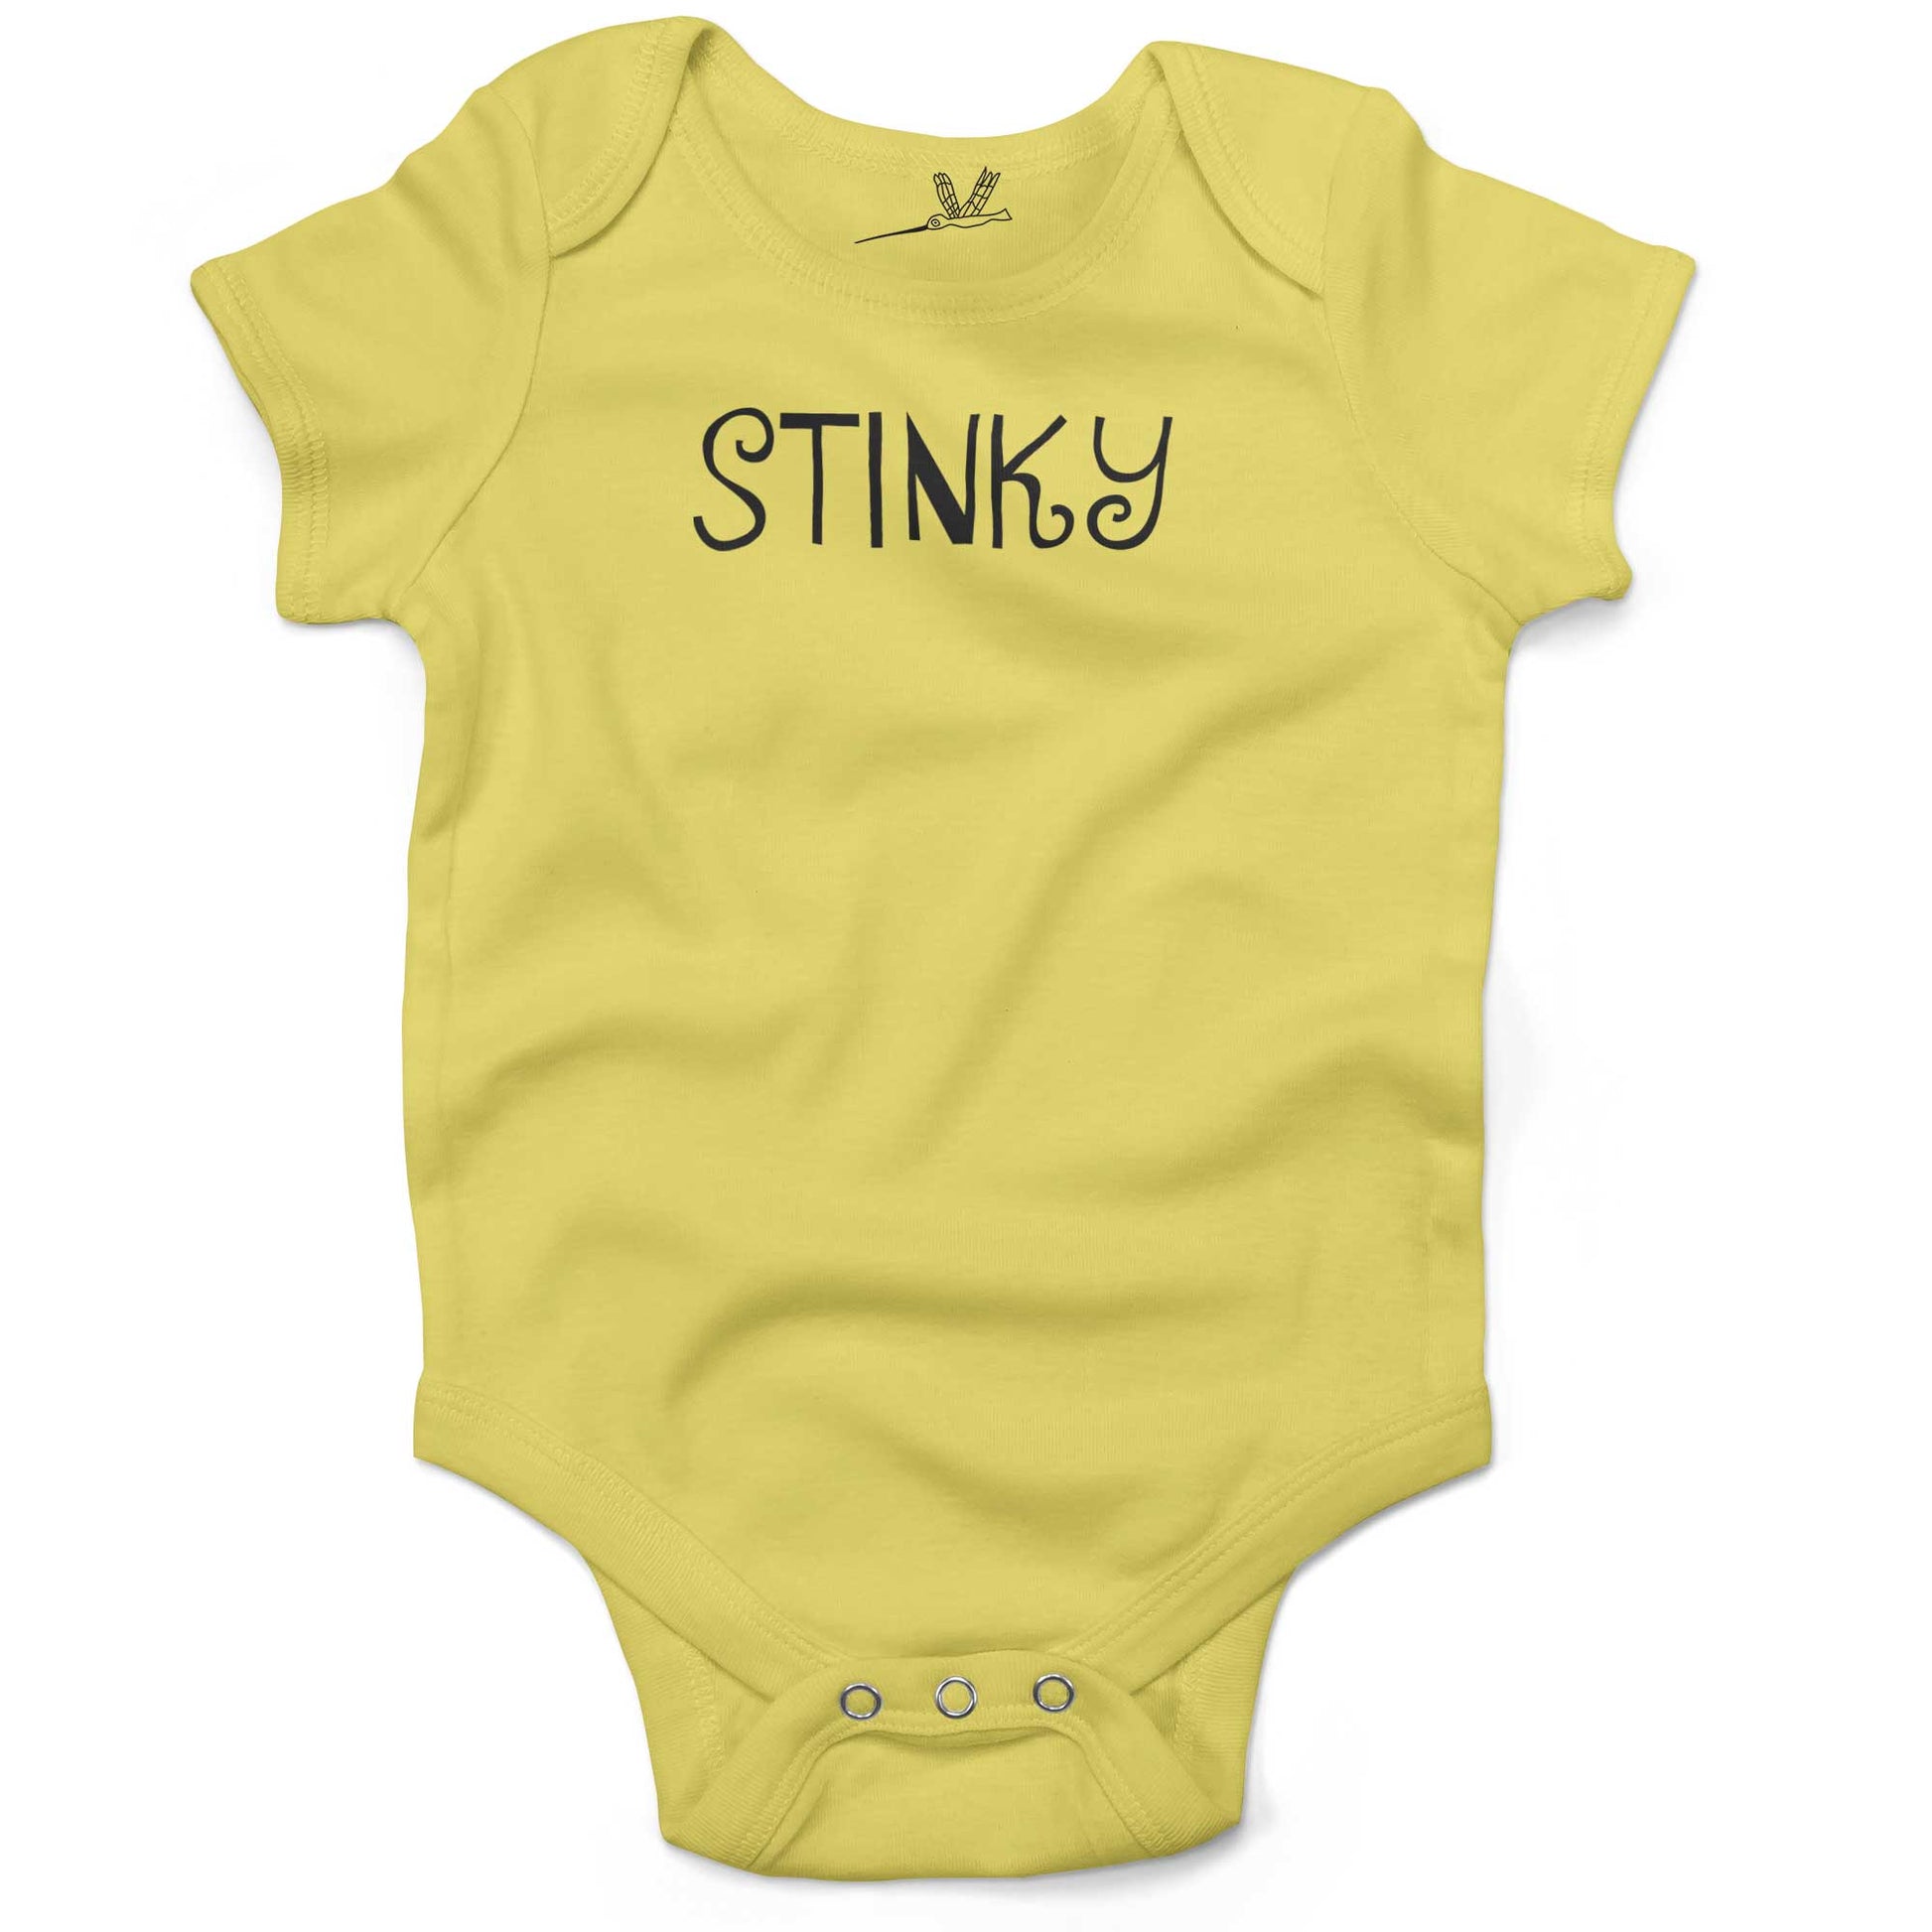 Stinky Infant Bodysuit or Raglan Baby Tee-Yellow-3-6 months